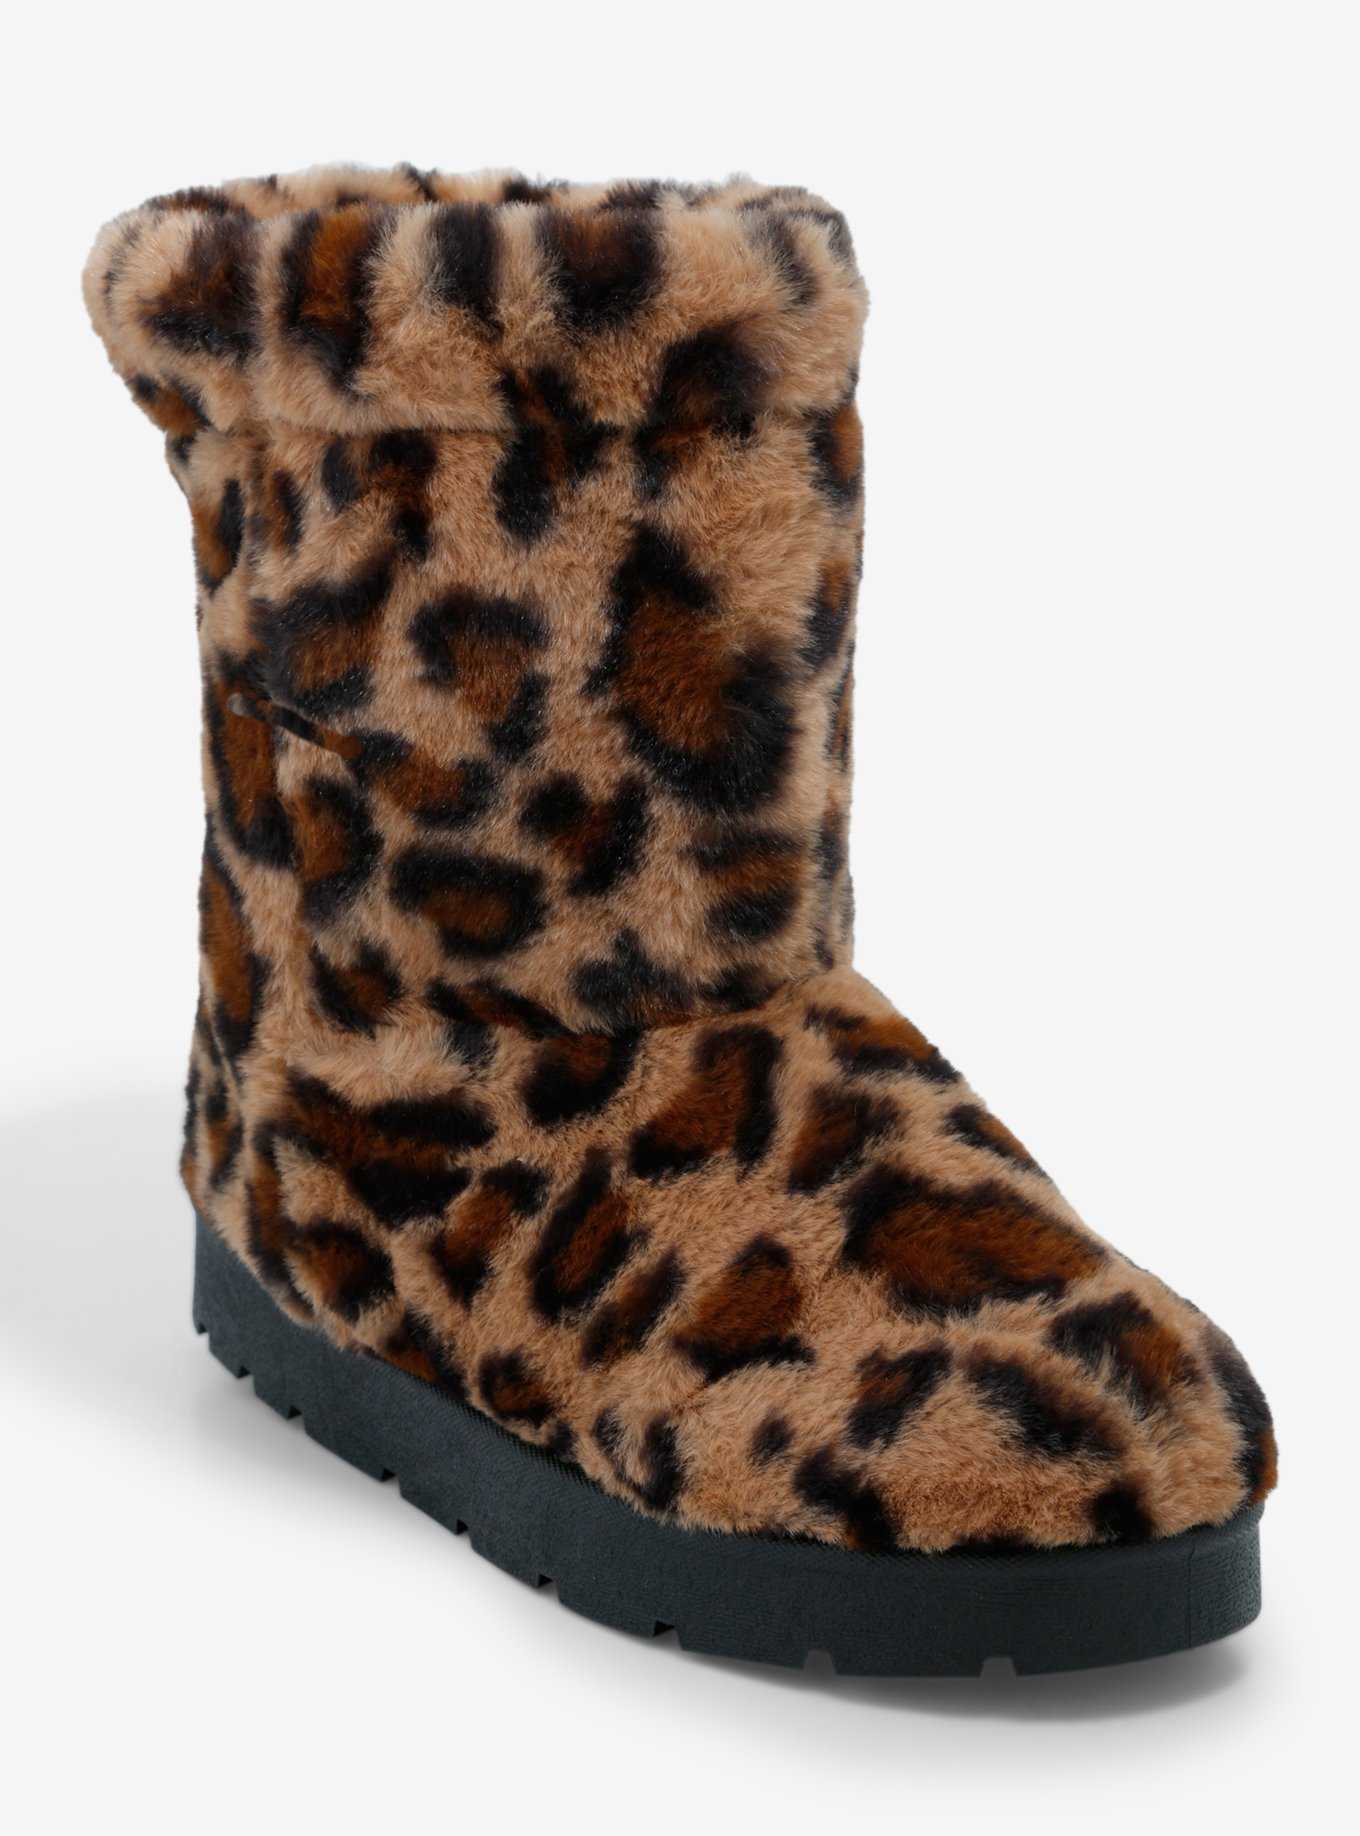 Yoki Holland Cheetah Fuzzy Boots, , hi-res